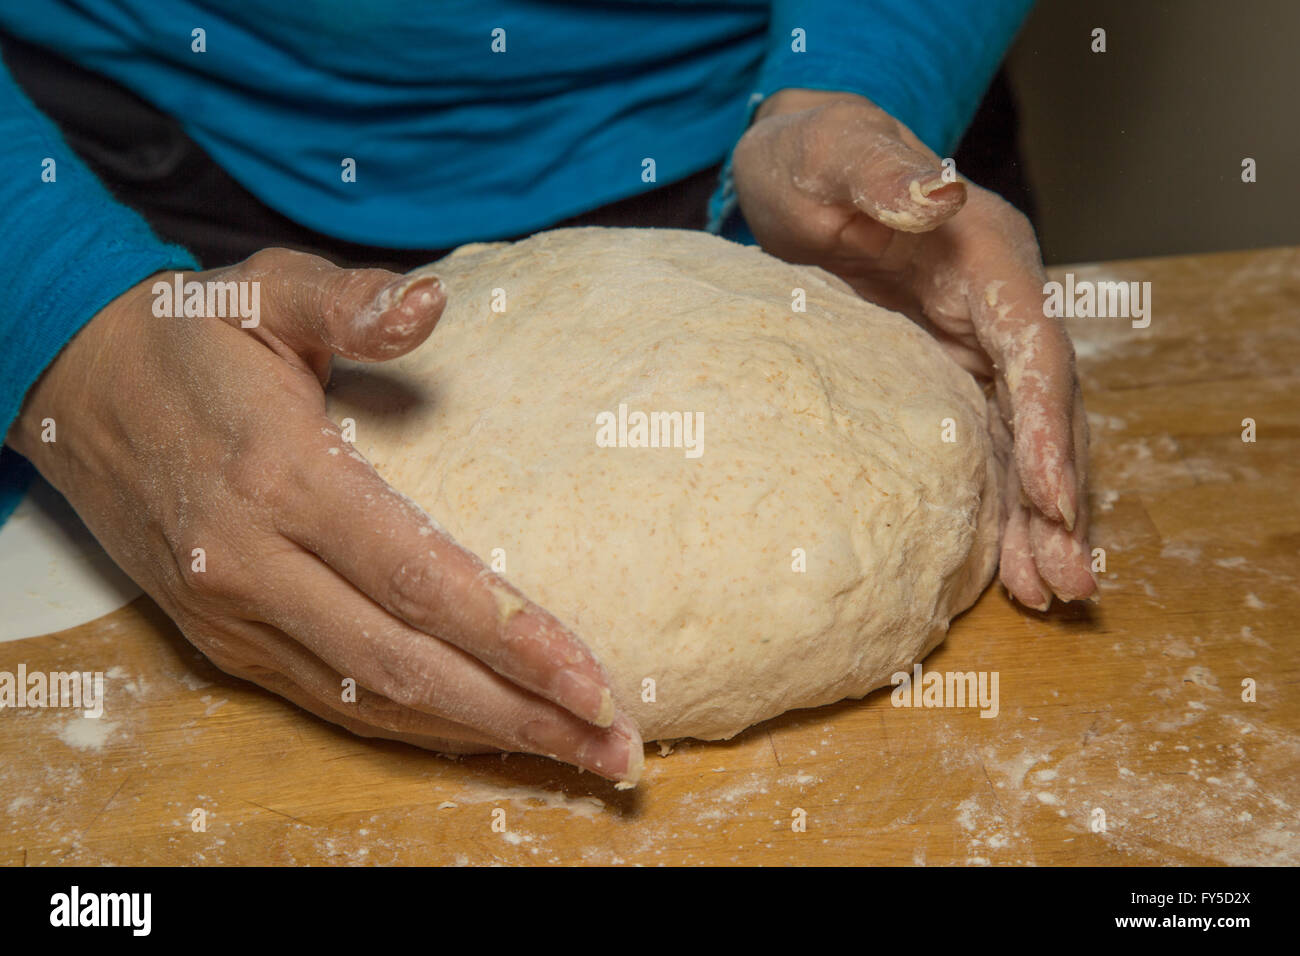 kneading bread dough Stock Photo